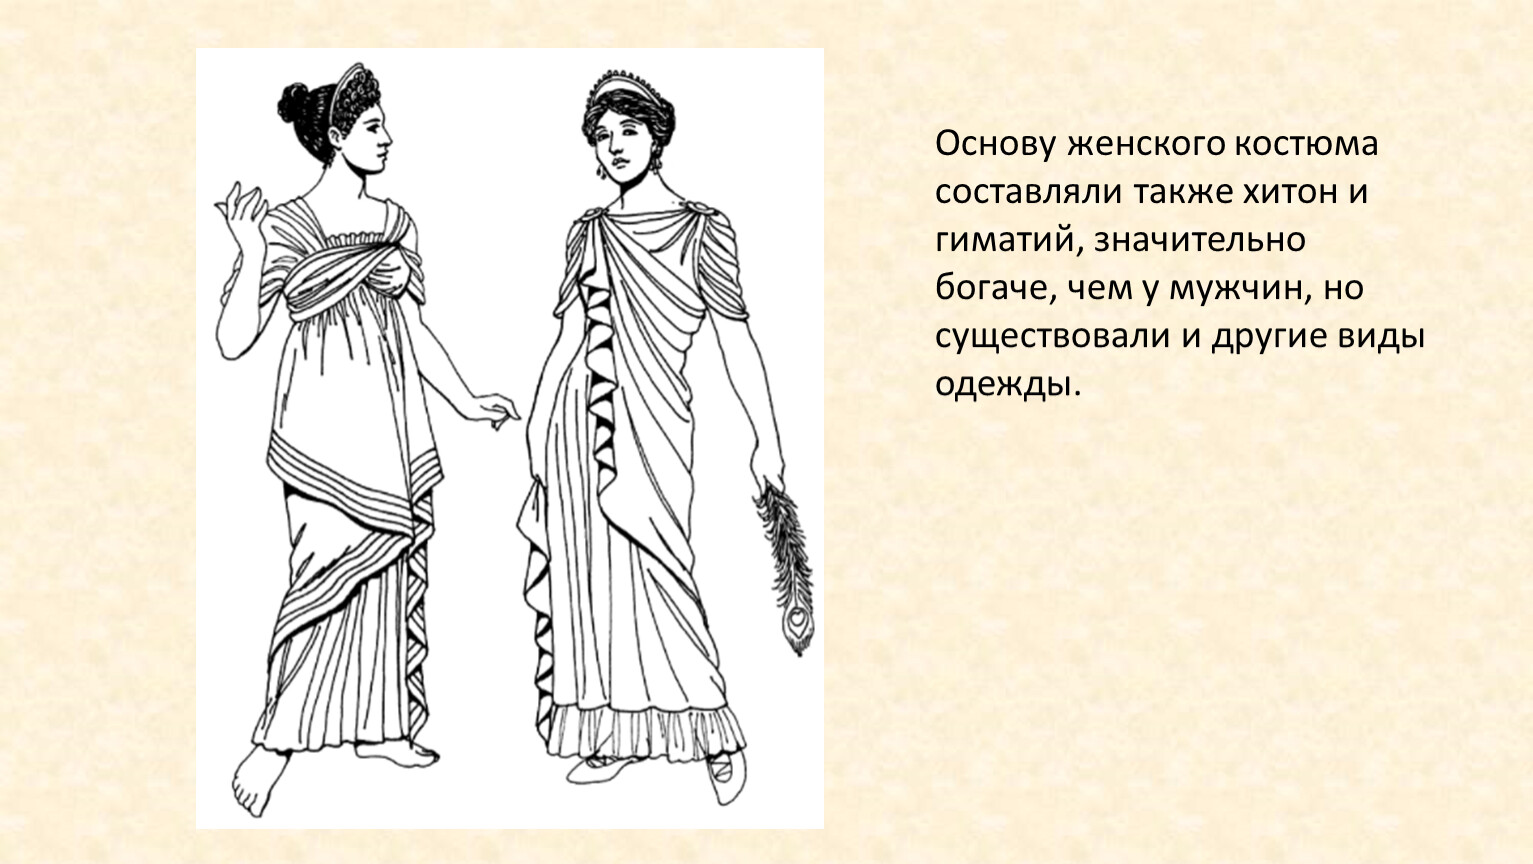 Гиматий в древней греции. Хитон и гиматий. Хитон одежда древней Греции. Костюм древней Греции женский. Гиматий одежда древней Греции.